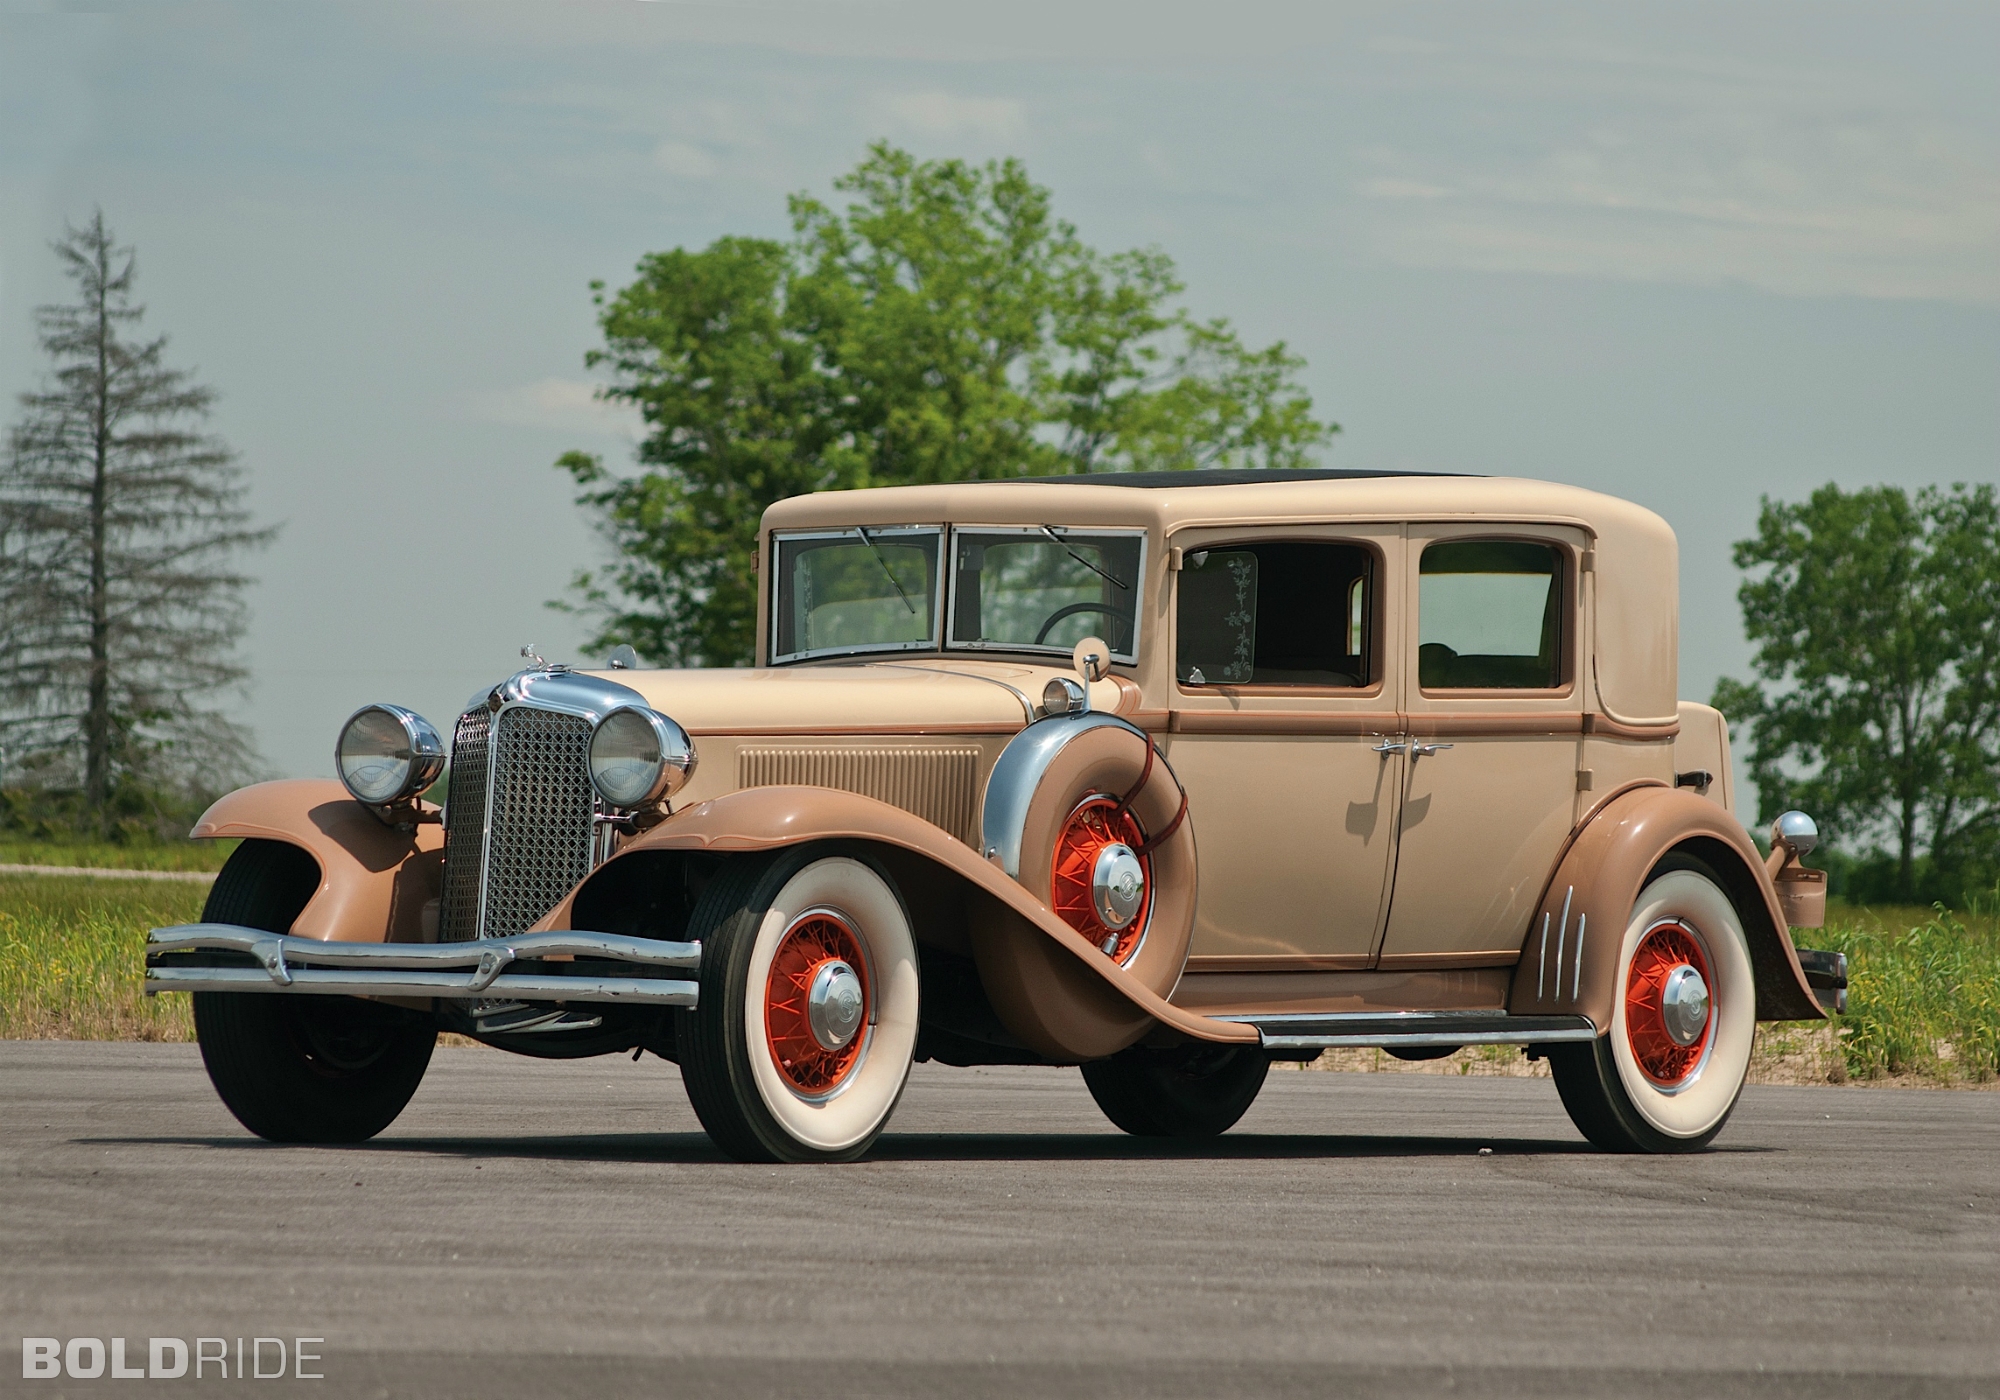 1931 Chrysler Imperial Sedan Boldride.com - Pictures, Wallpapers